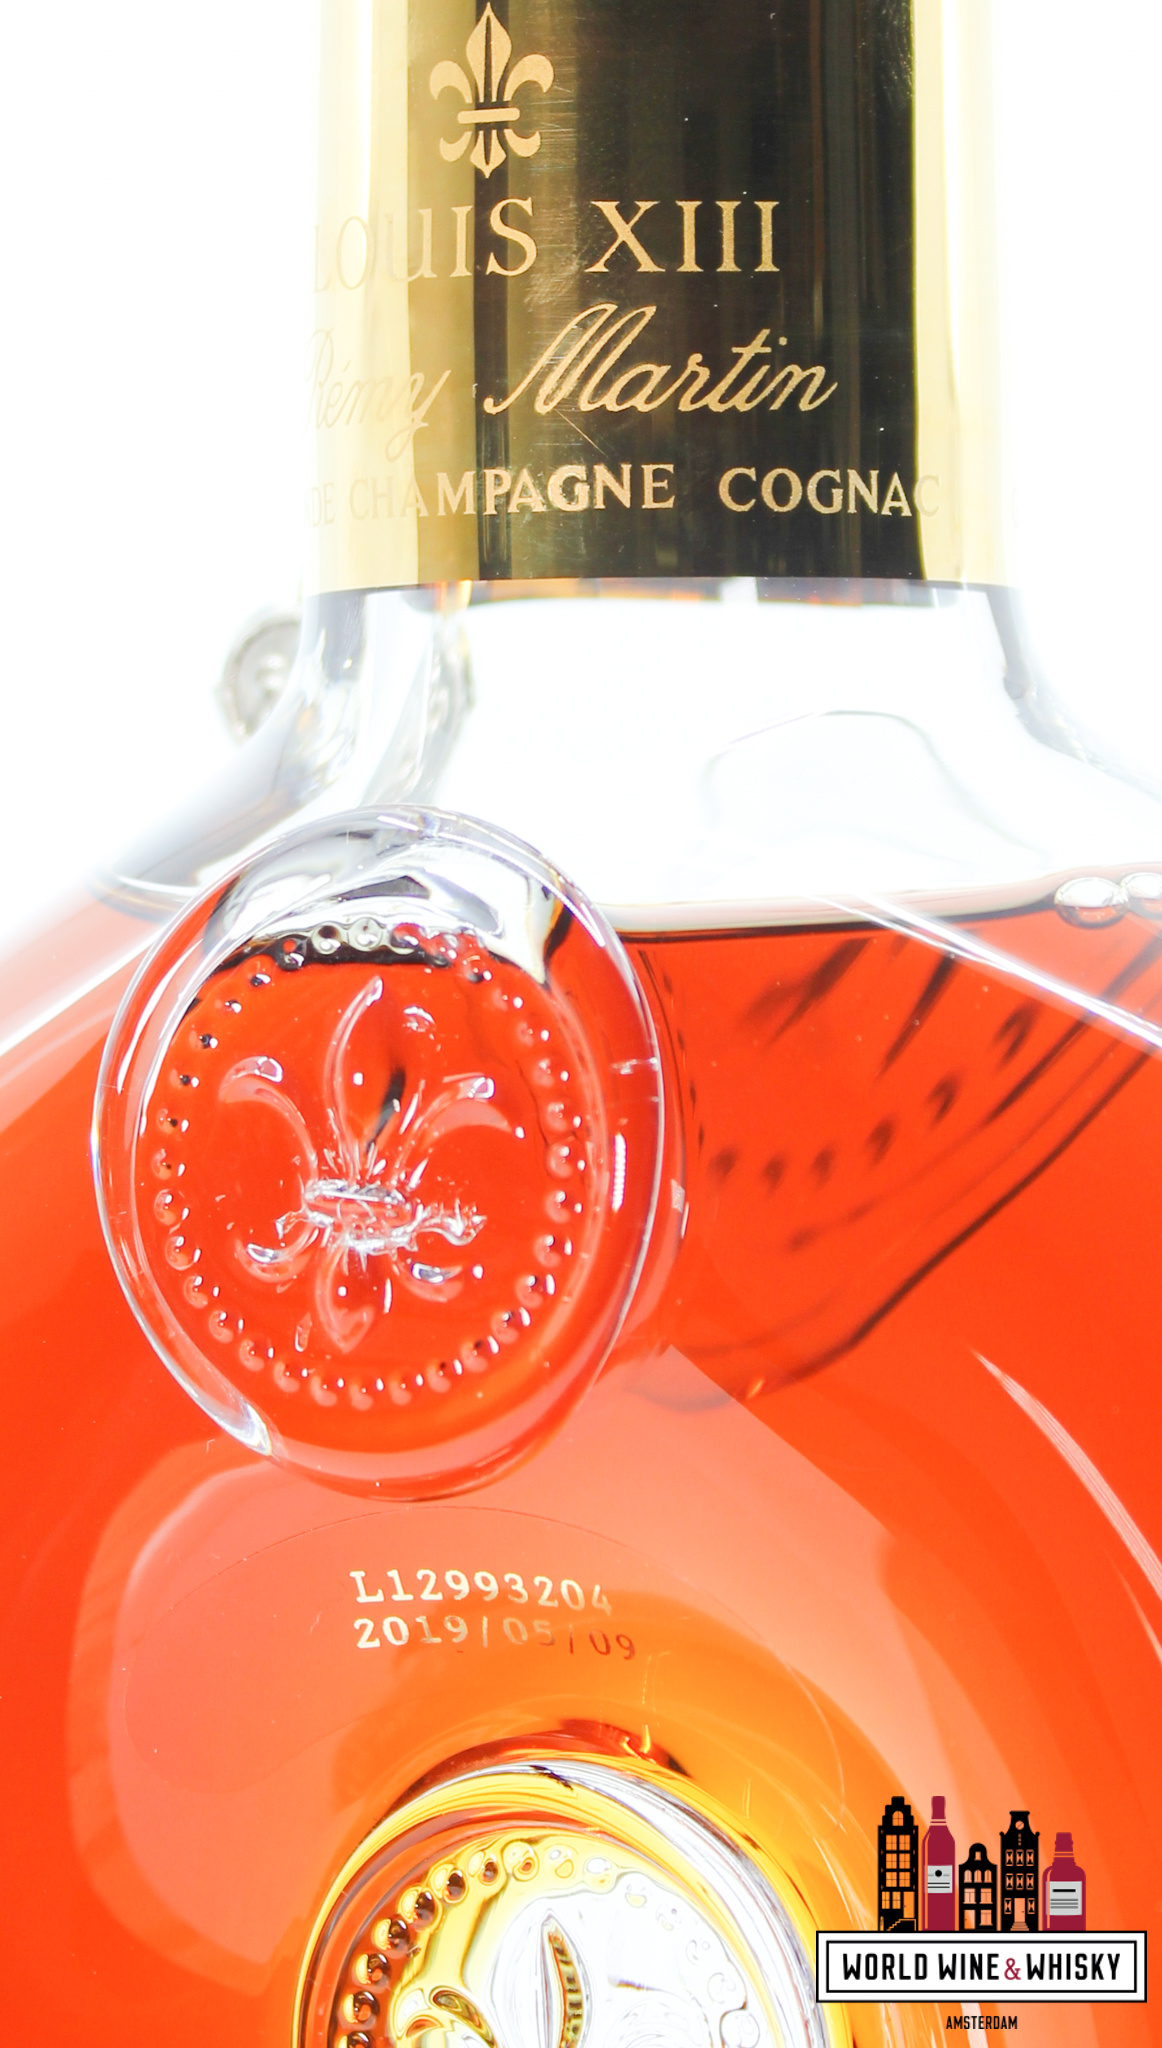 Louis XIII Remy Martin Grande Champagne Cognac Bottle Baccarat Vintage 1960  #RemyMartin